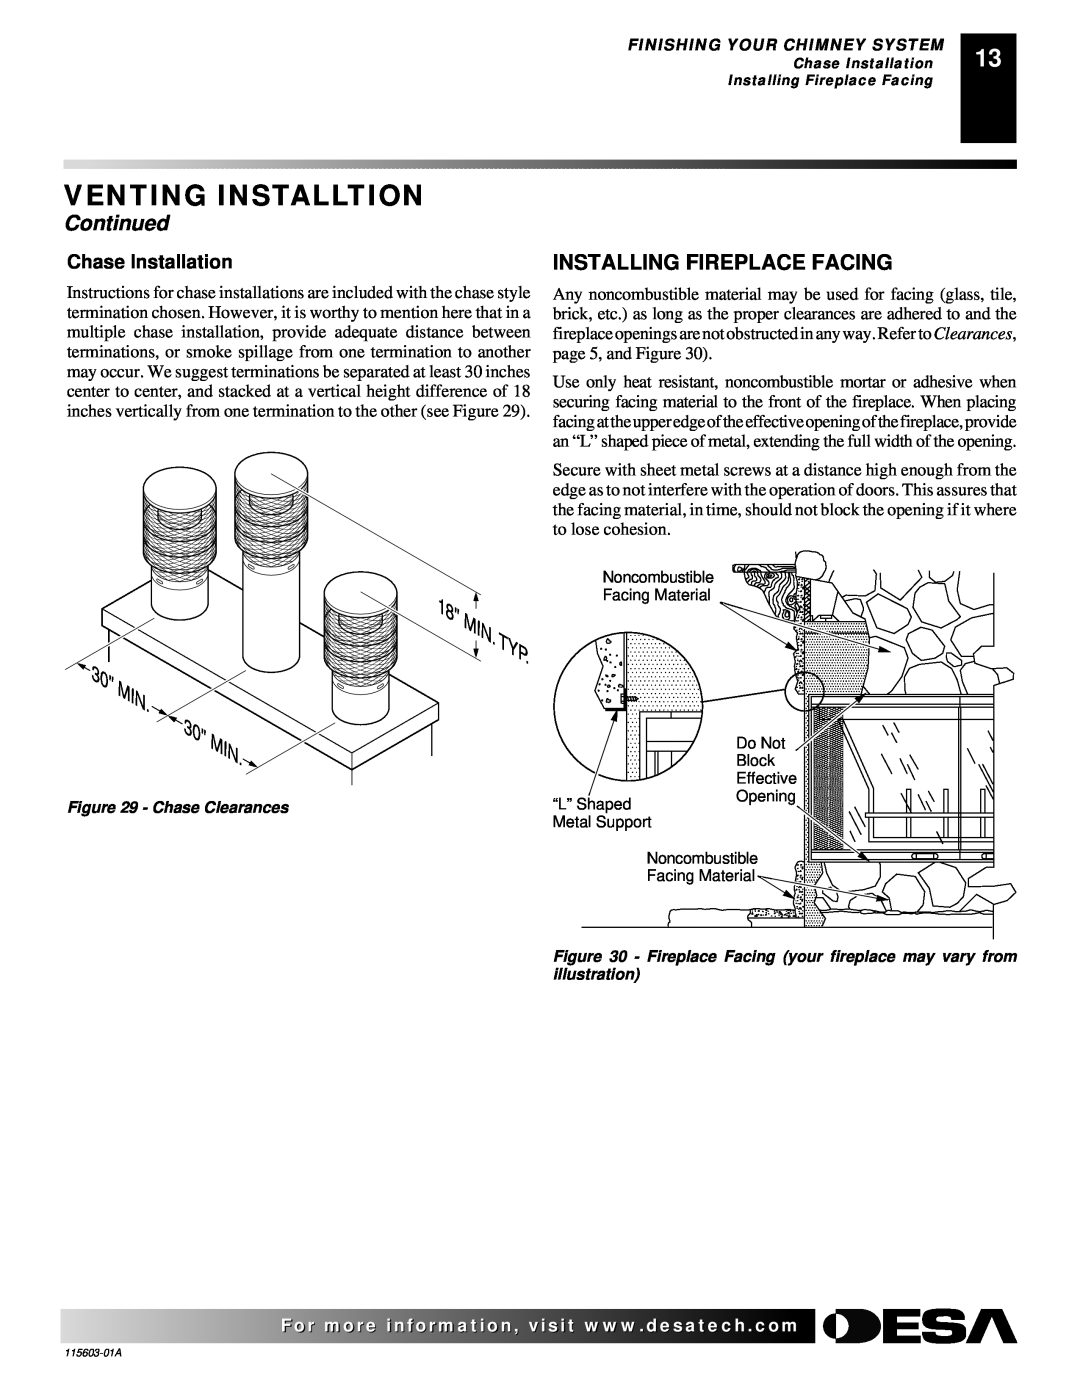 Desa (V)3612ST operating instructions Venting Installtion, Continued, Installing Fireplace Facing 